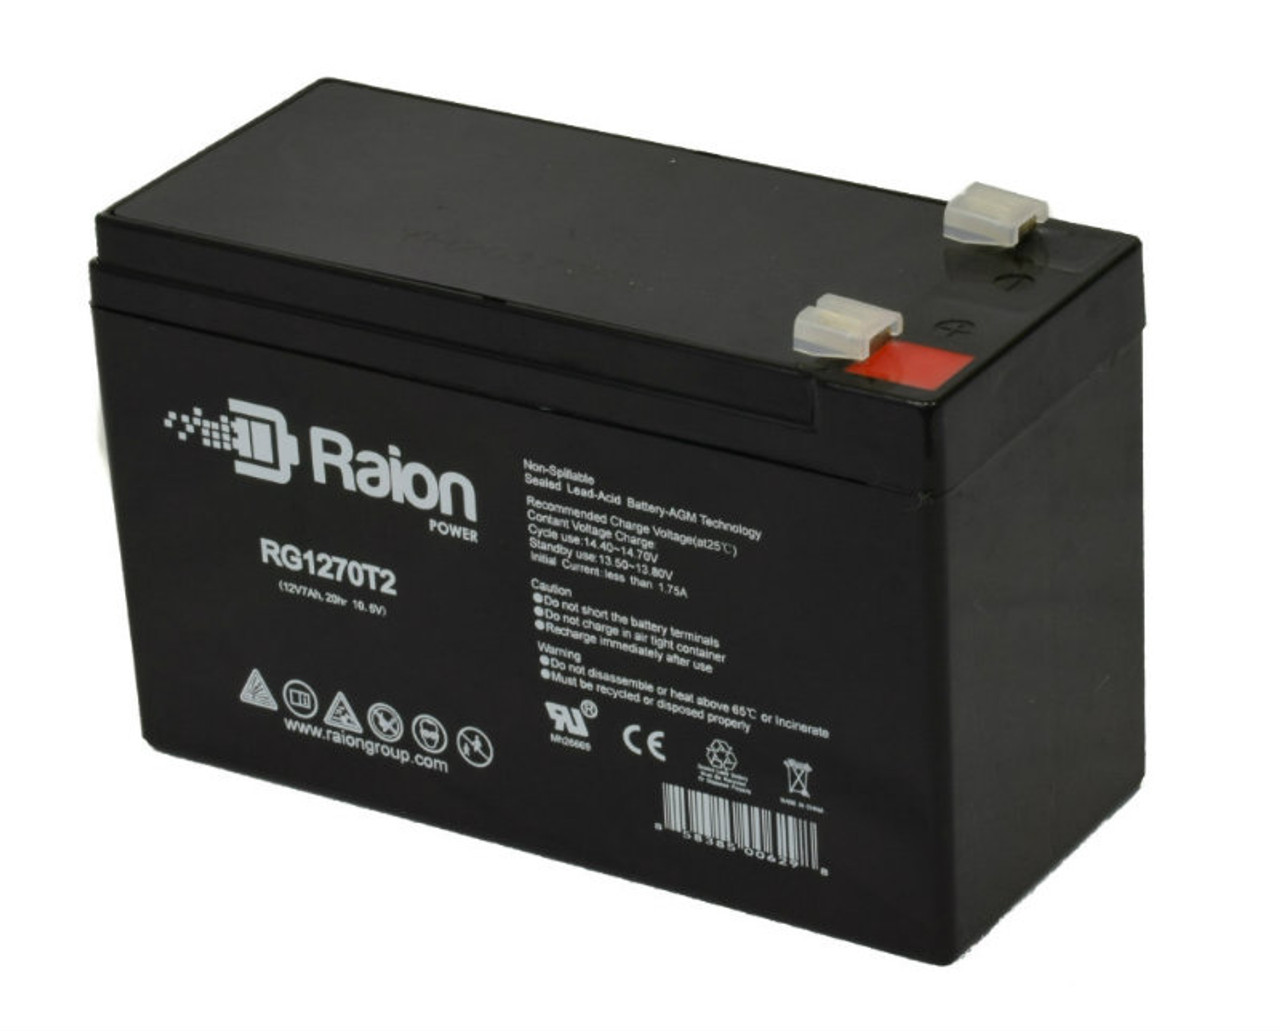 Raion Power RG1270T2 12V 7Ah Rechargeable Battery for C Power CS12-7.0